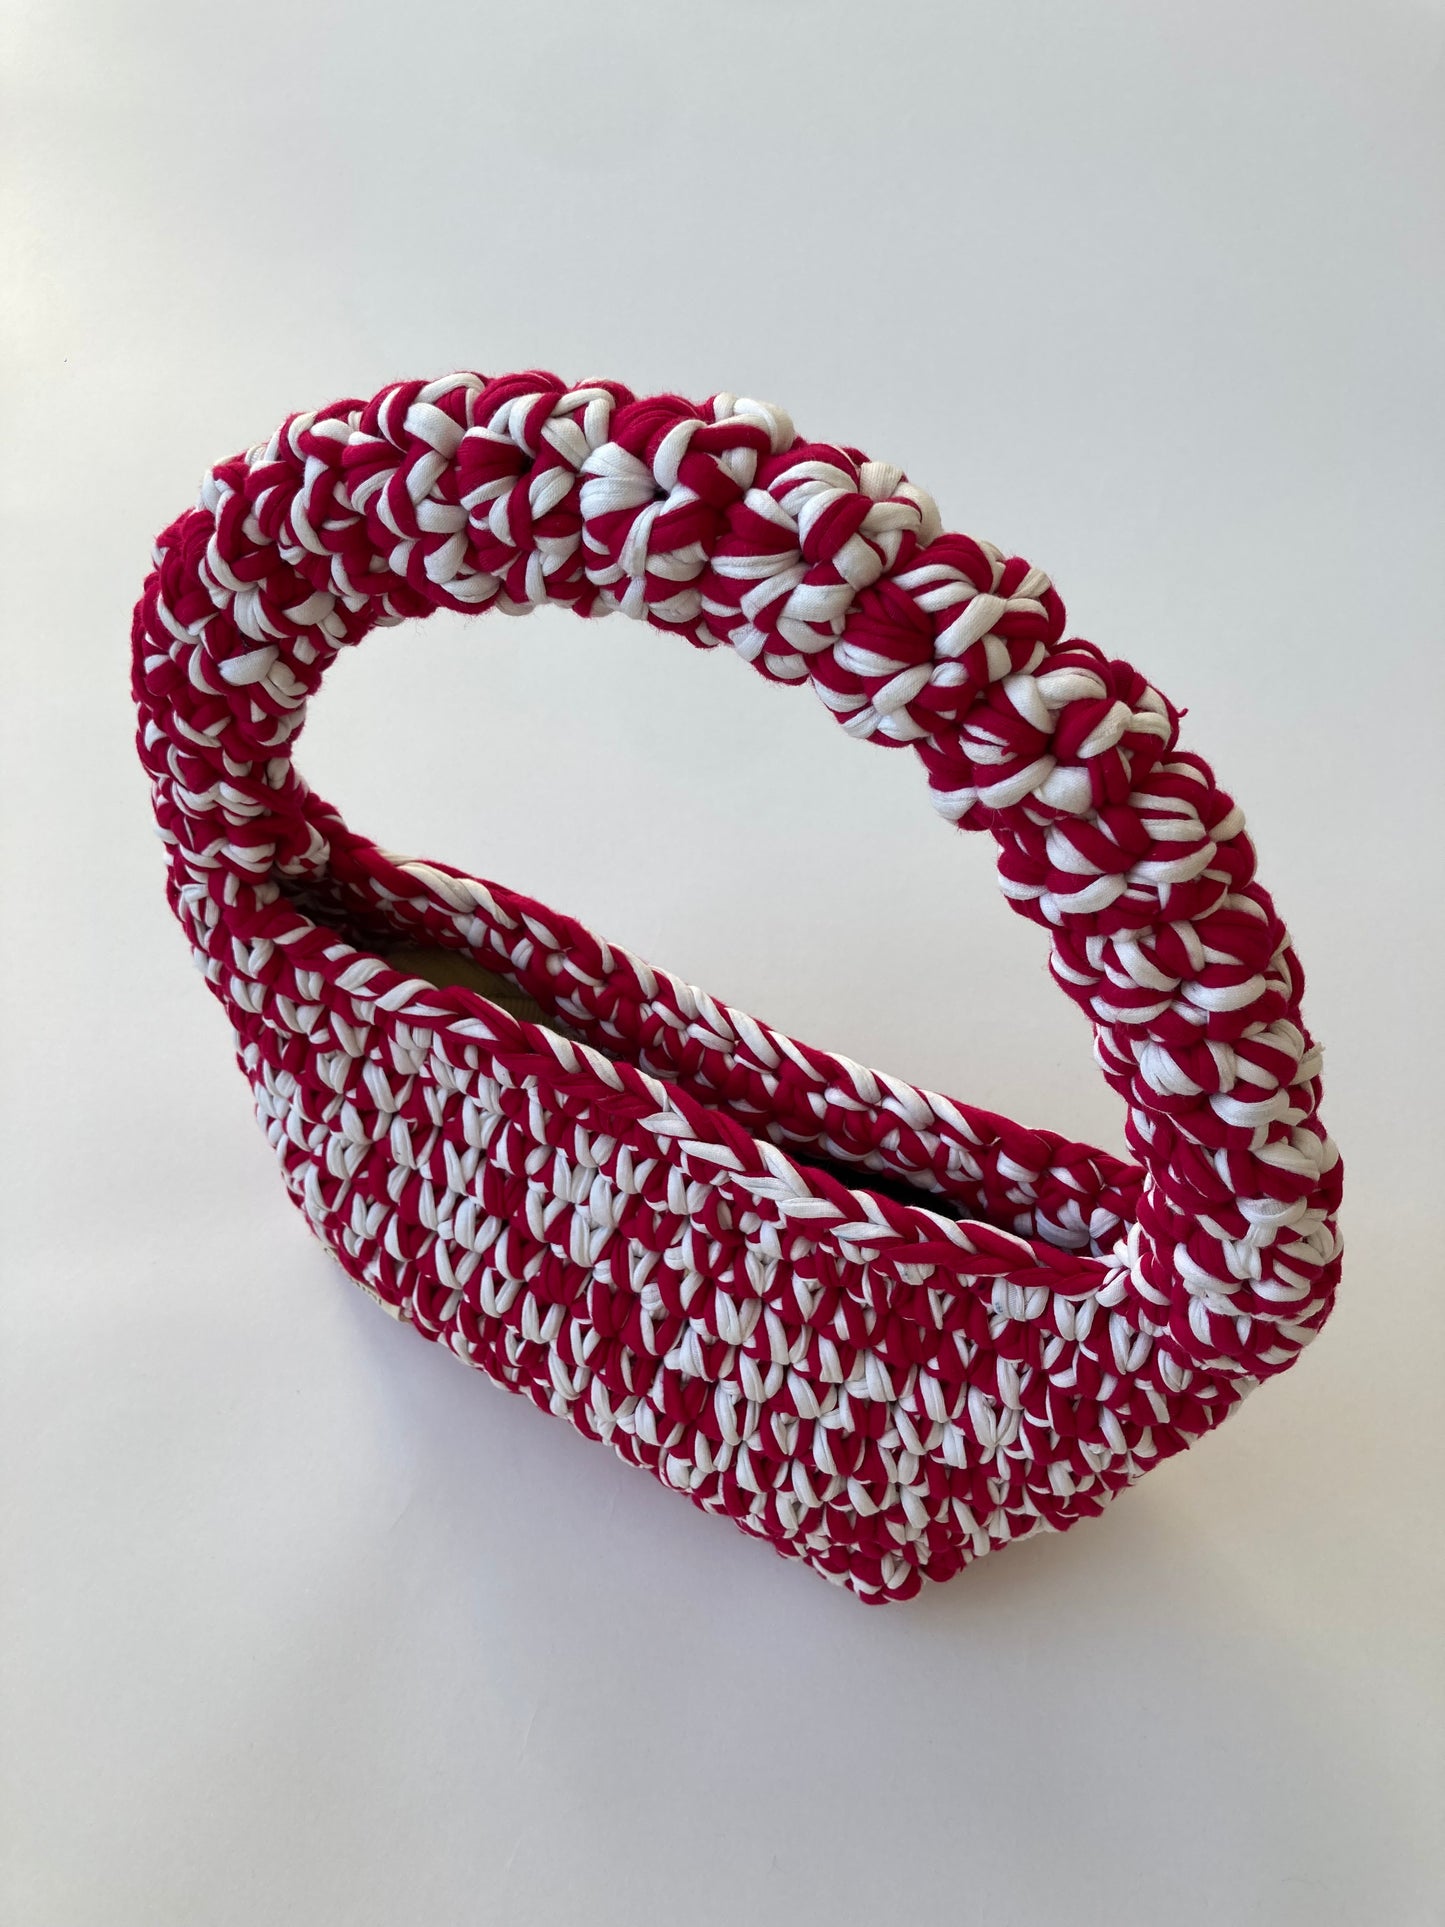 Medium LIINA White and Red Crochet Bag